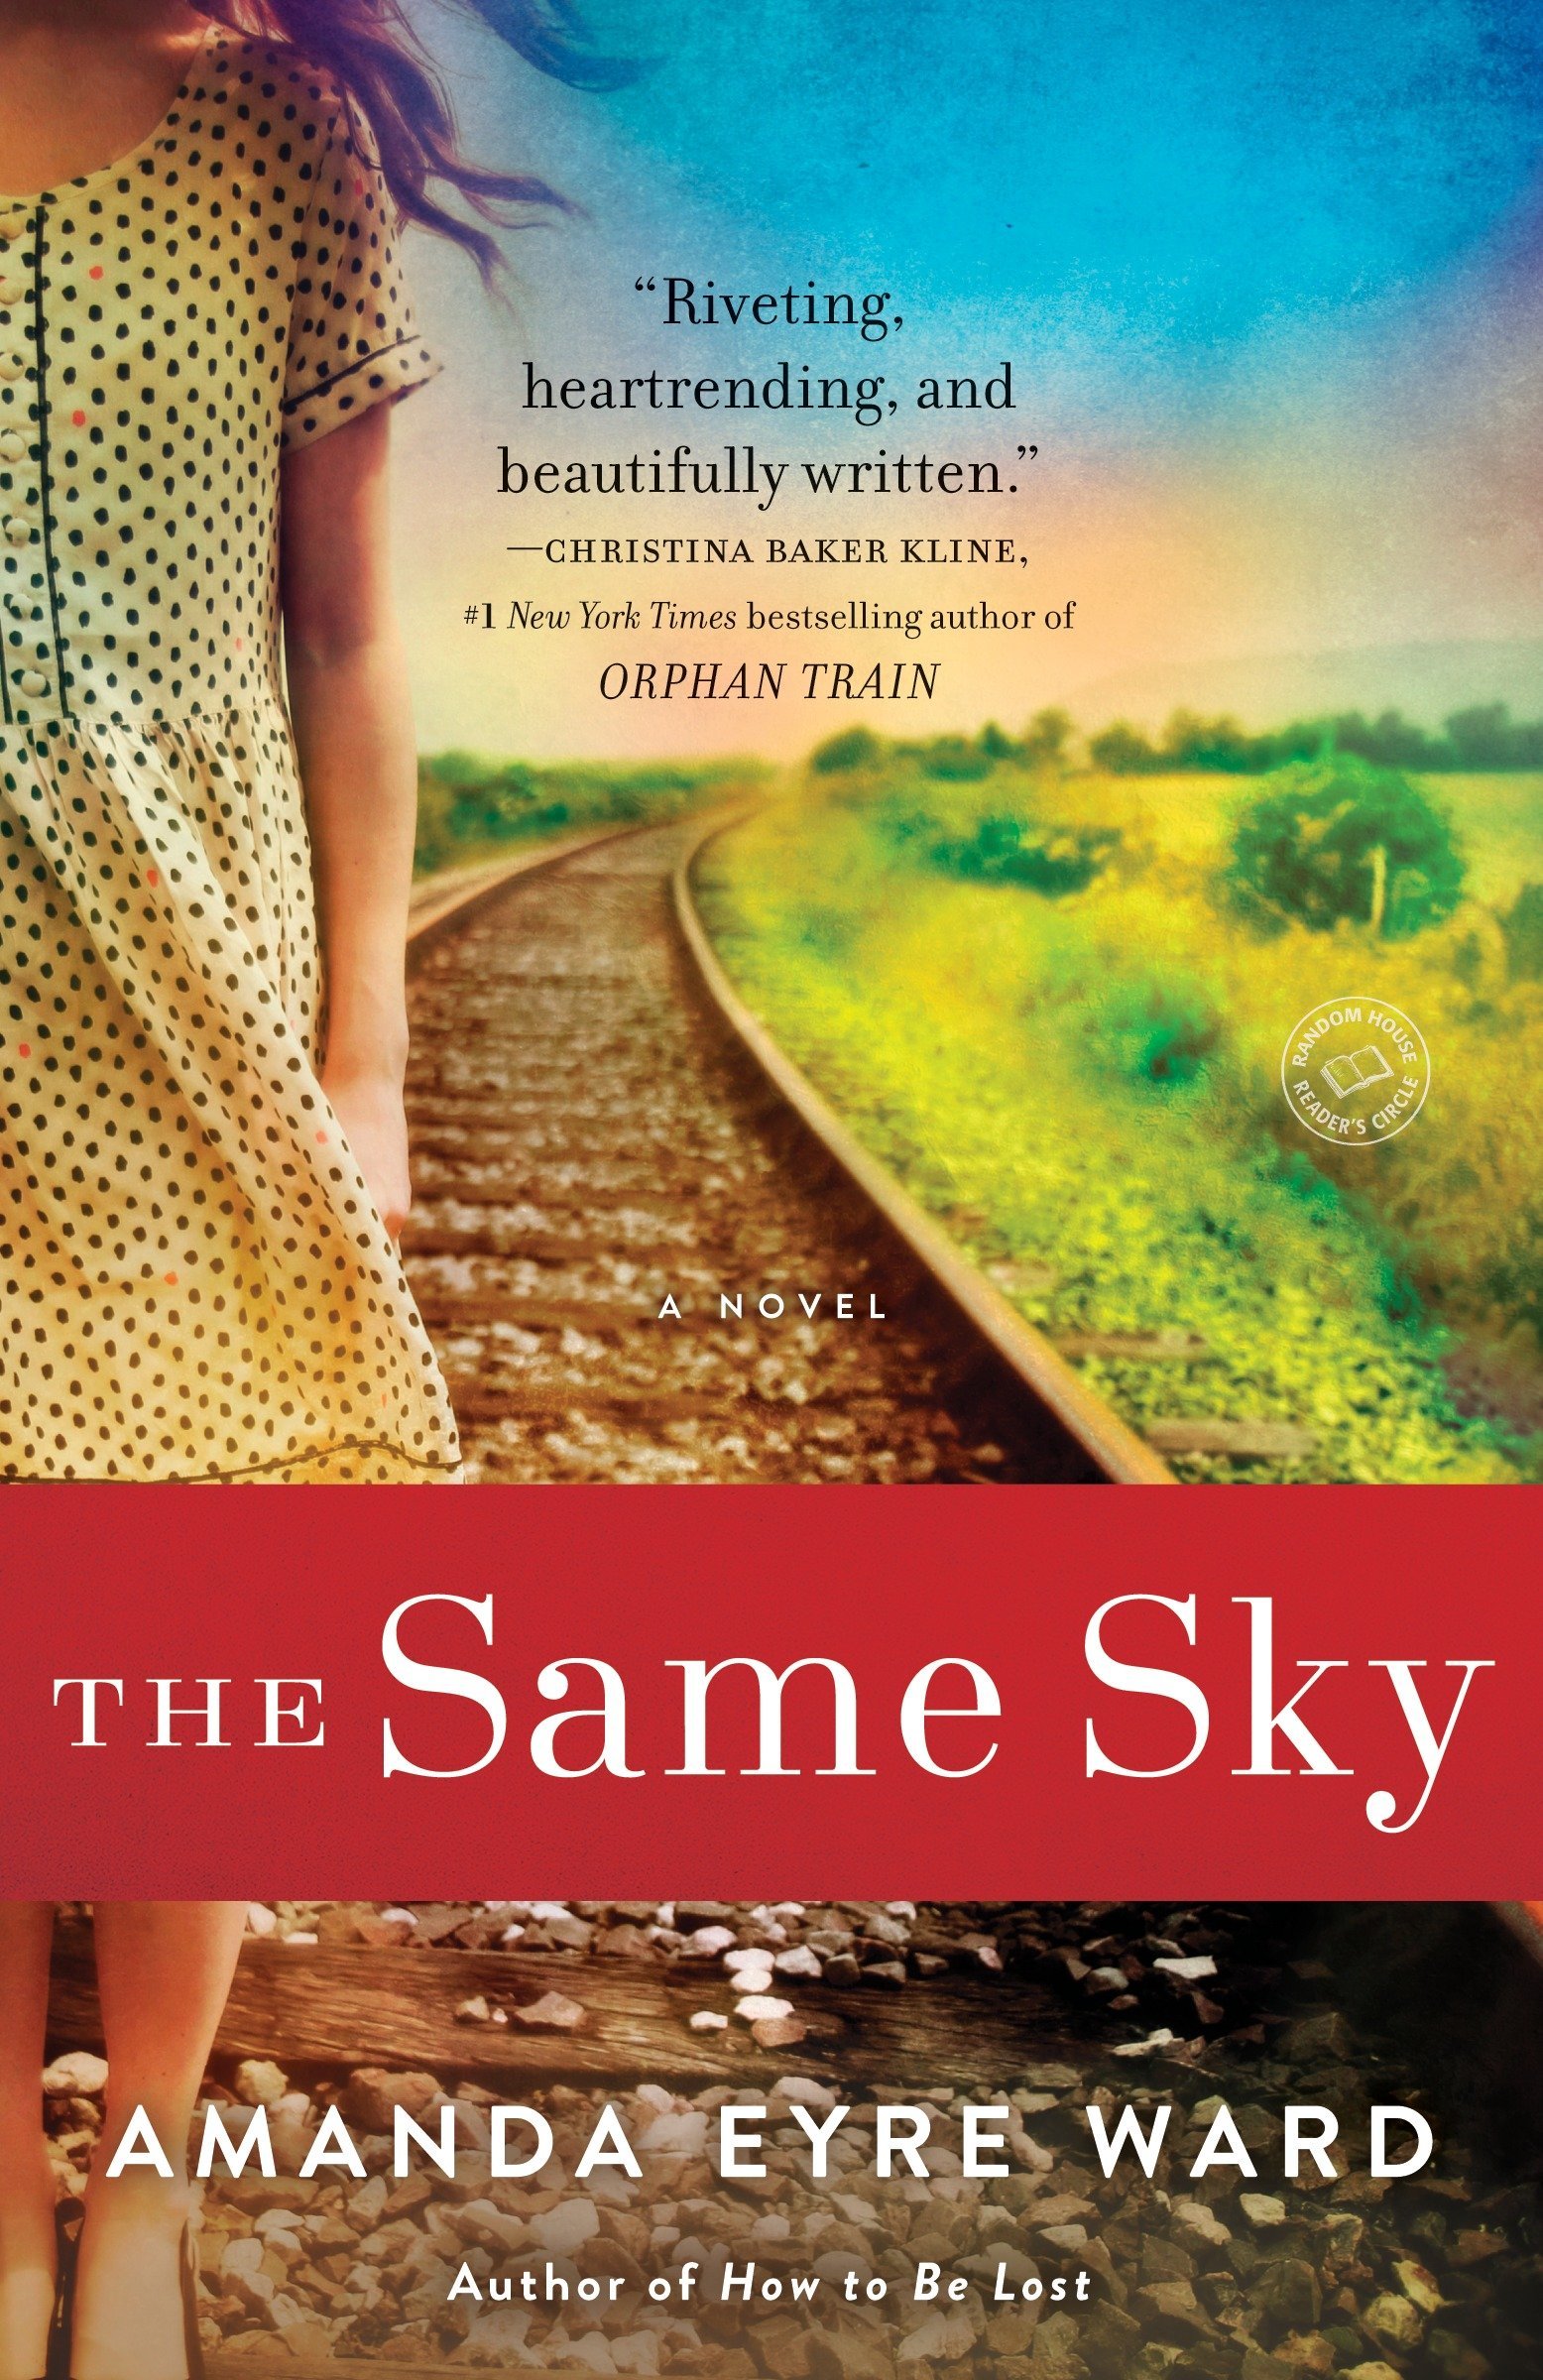 Book cover for Amanda Eyre Ward's book "The Same Sky".